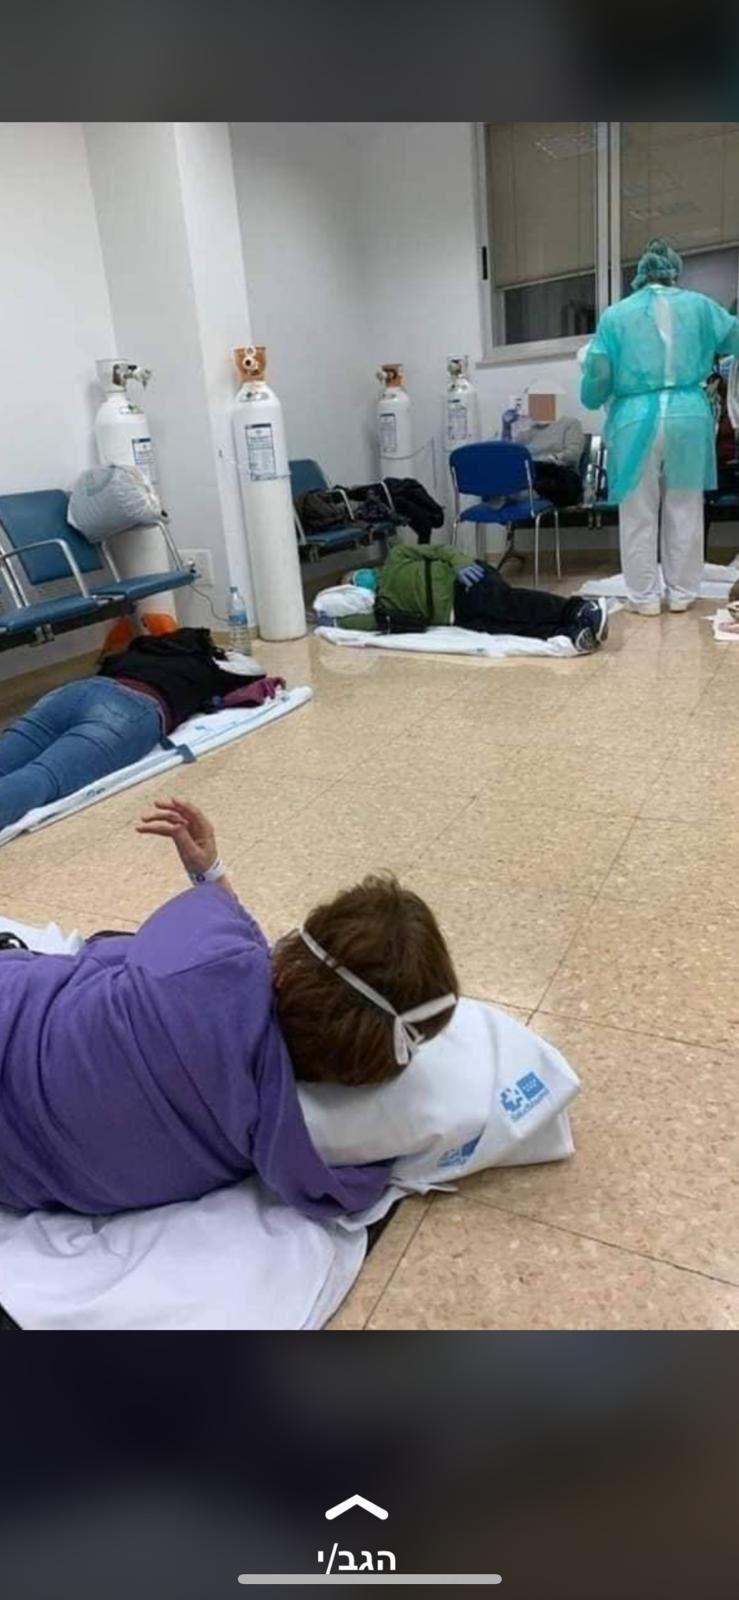 مشاهد صادمة من مستشفى بـ"إسرائیل".. وتخوف من انتشار کورونا